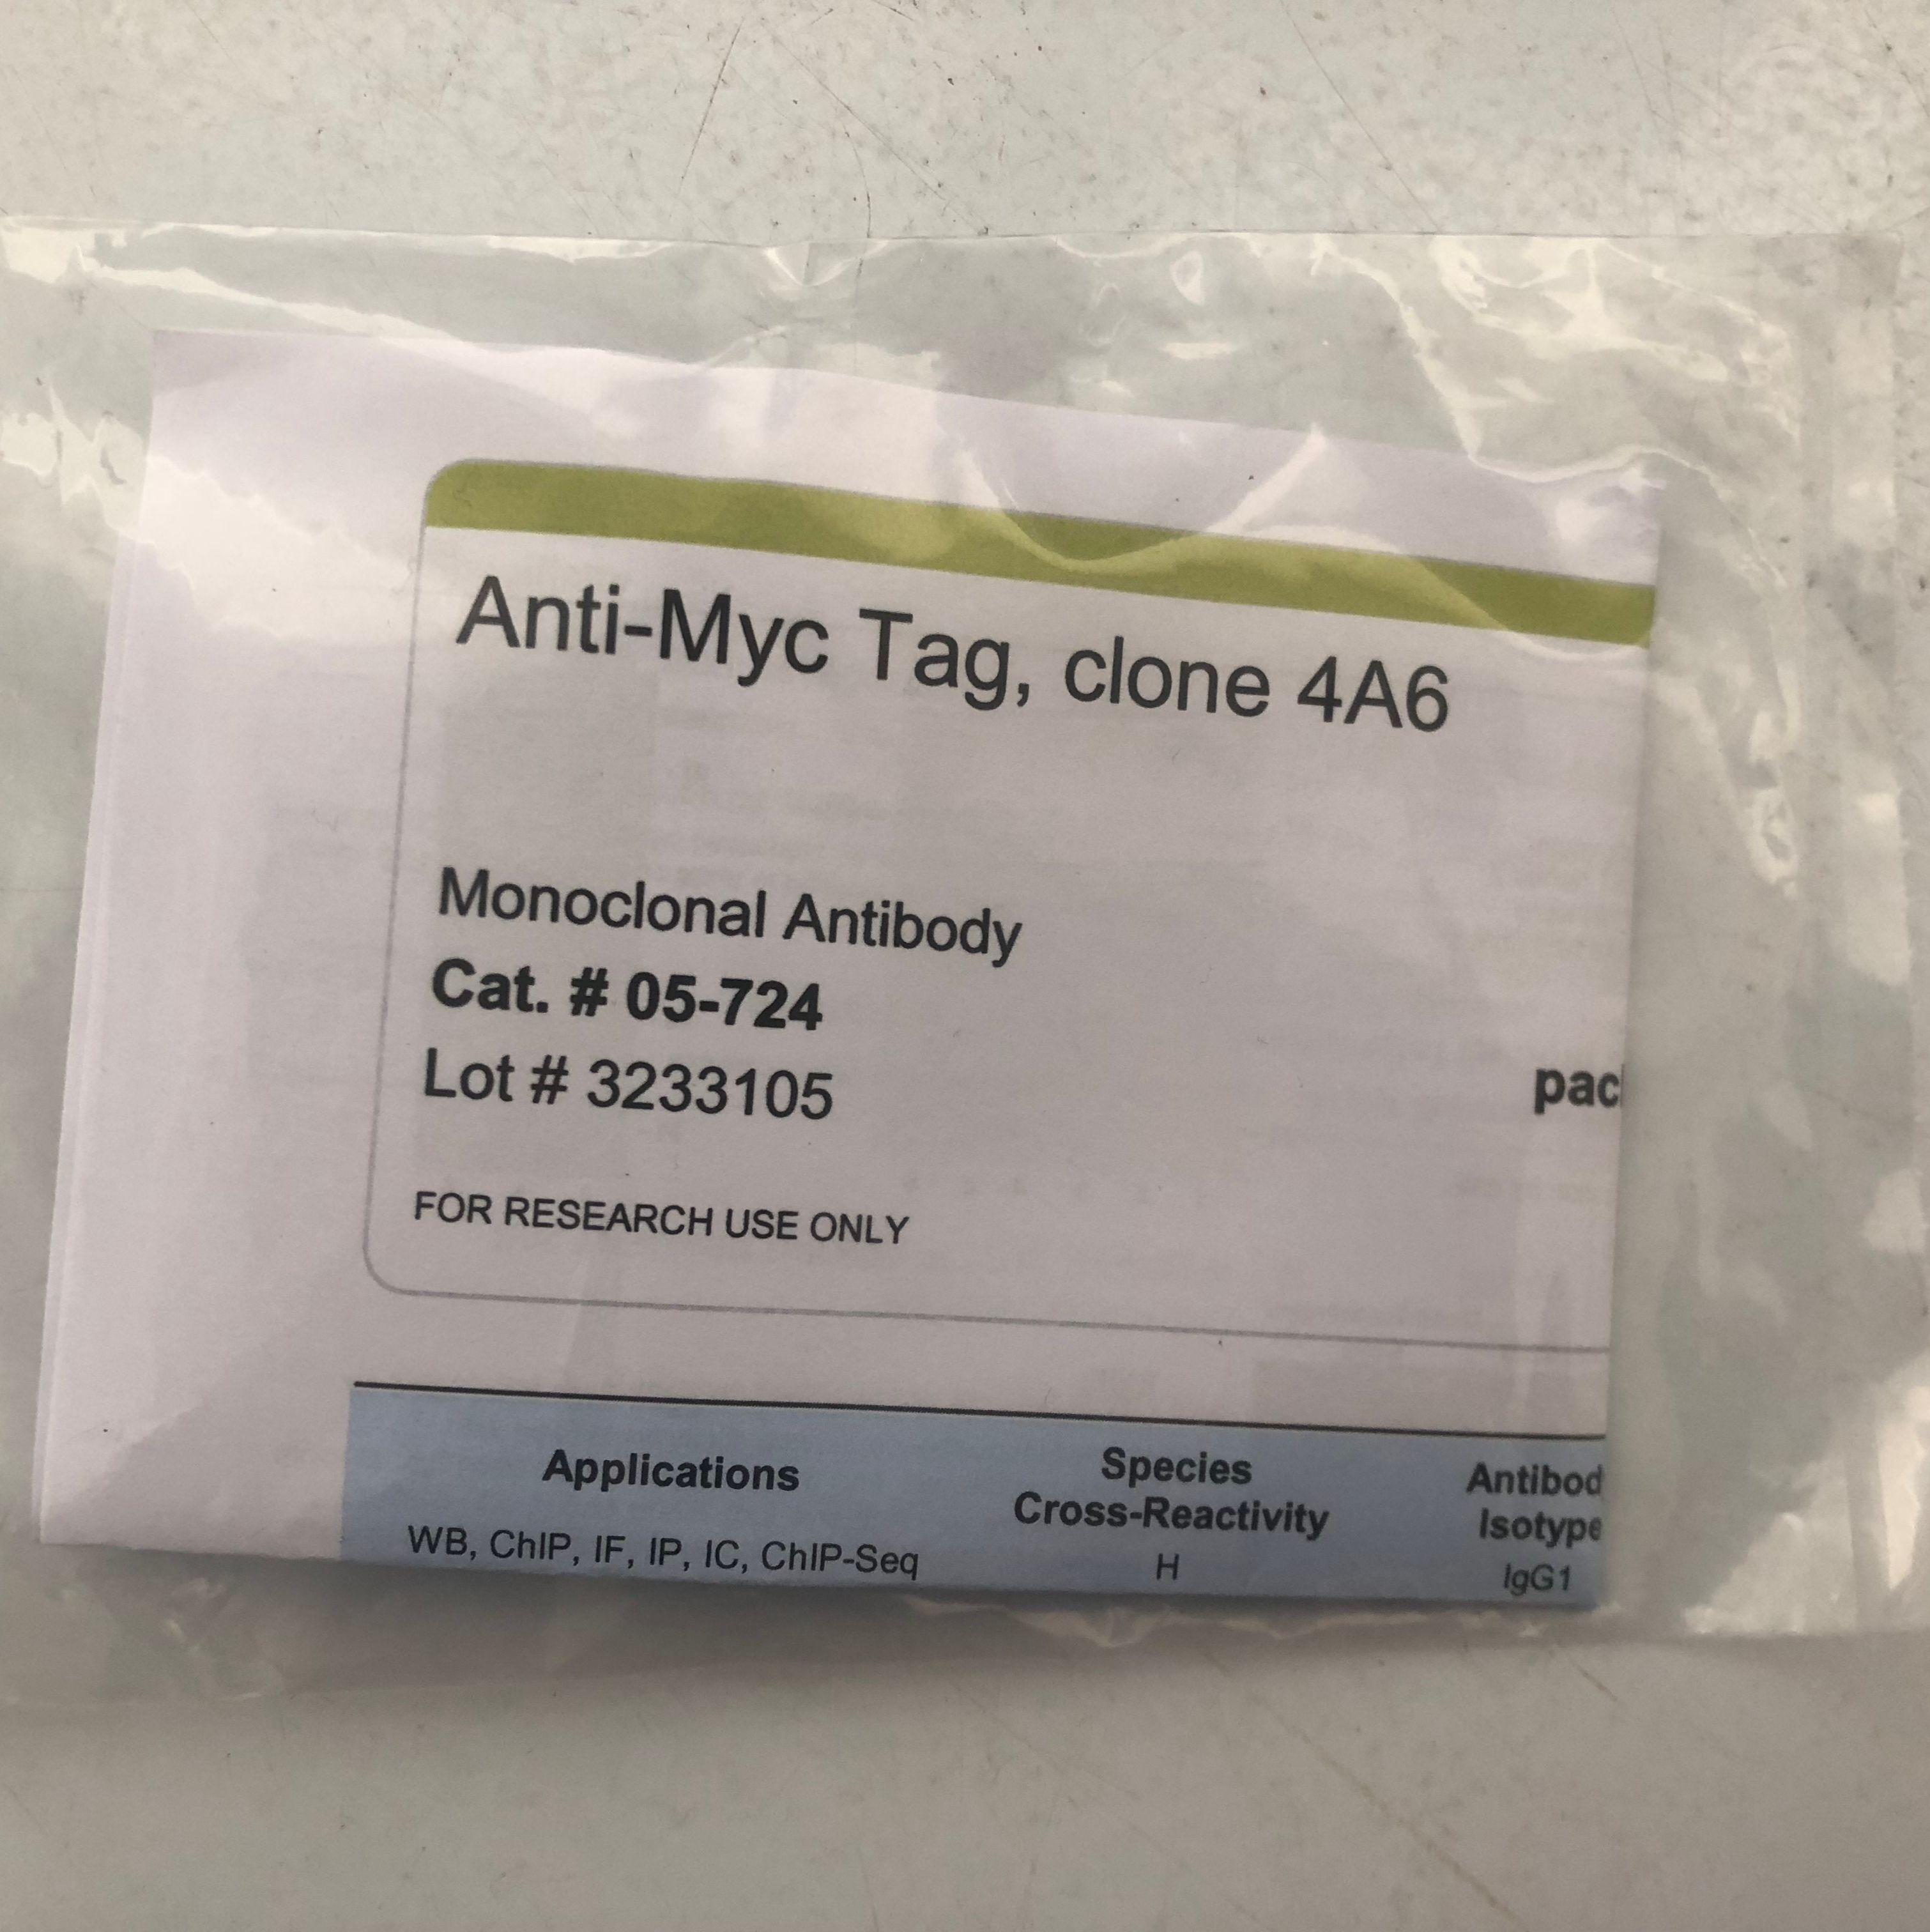 Anti-Myc Tag, clone 4A6 (mouse monoclonal IgG1)